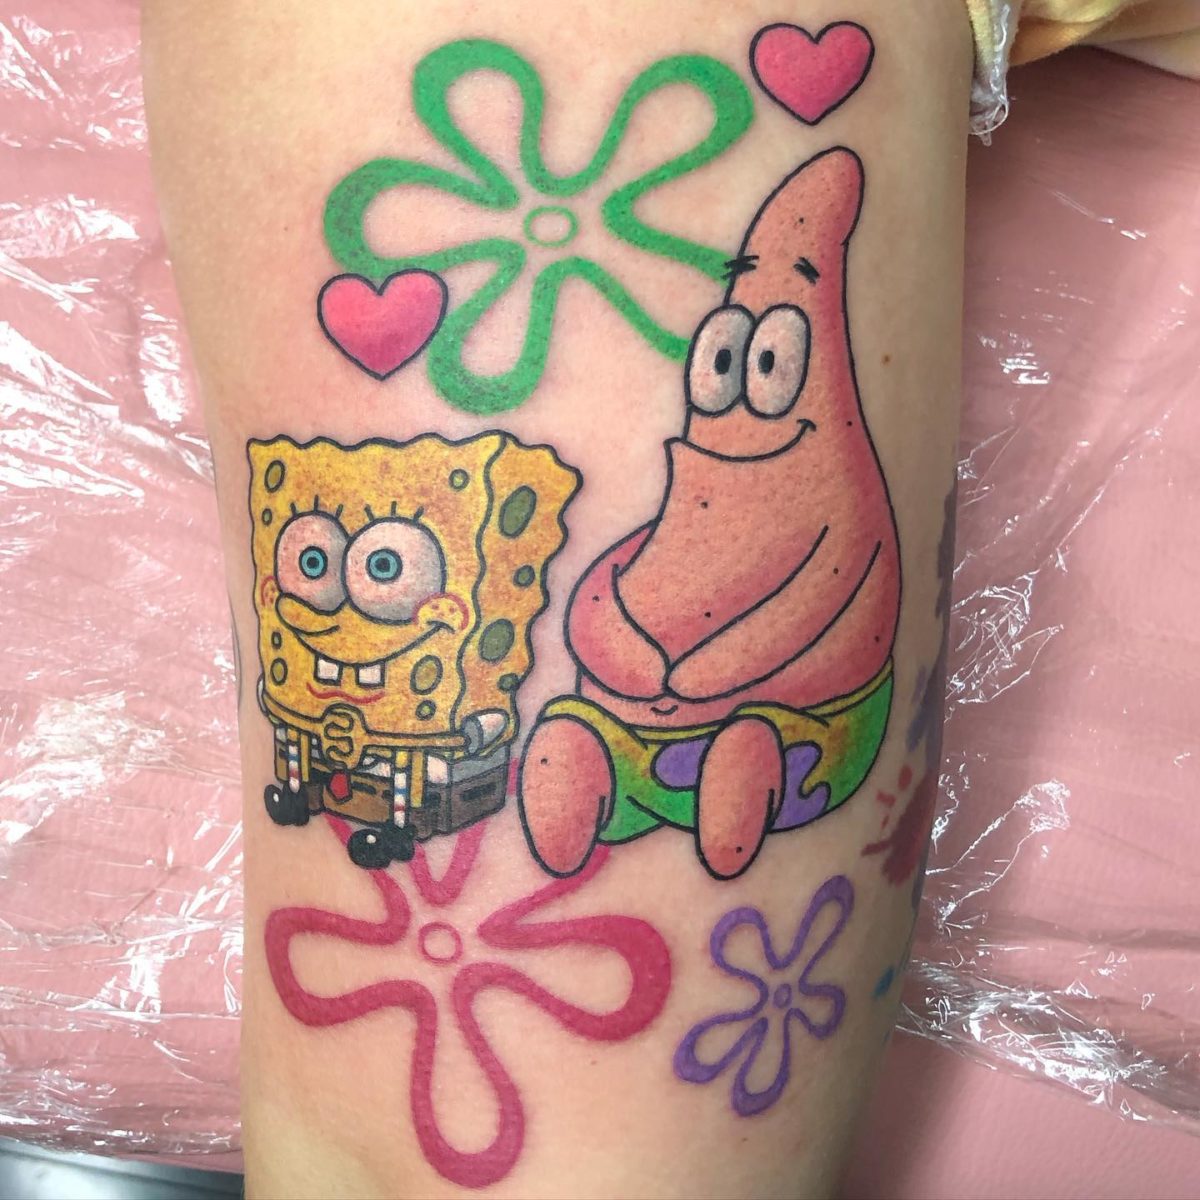 SpongeBob tattoos